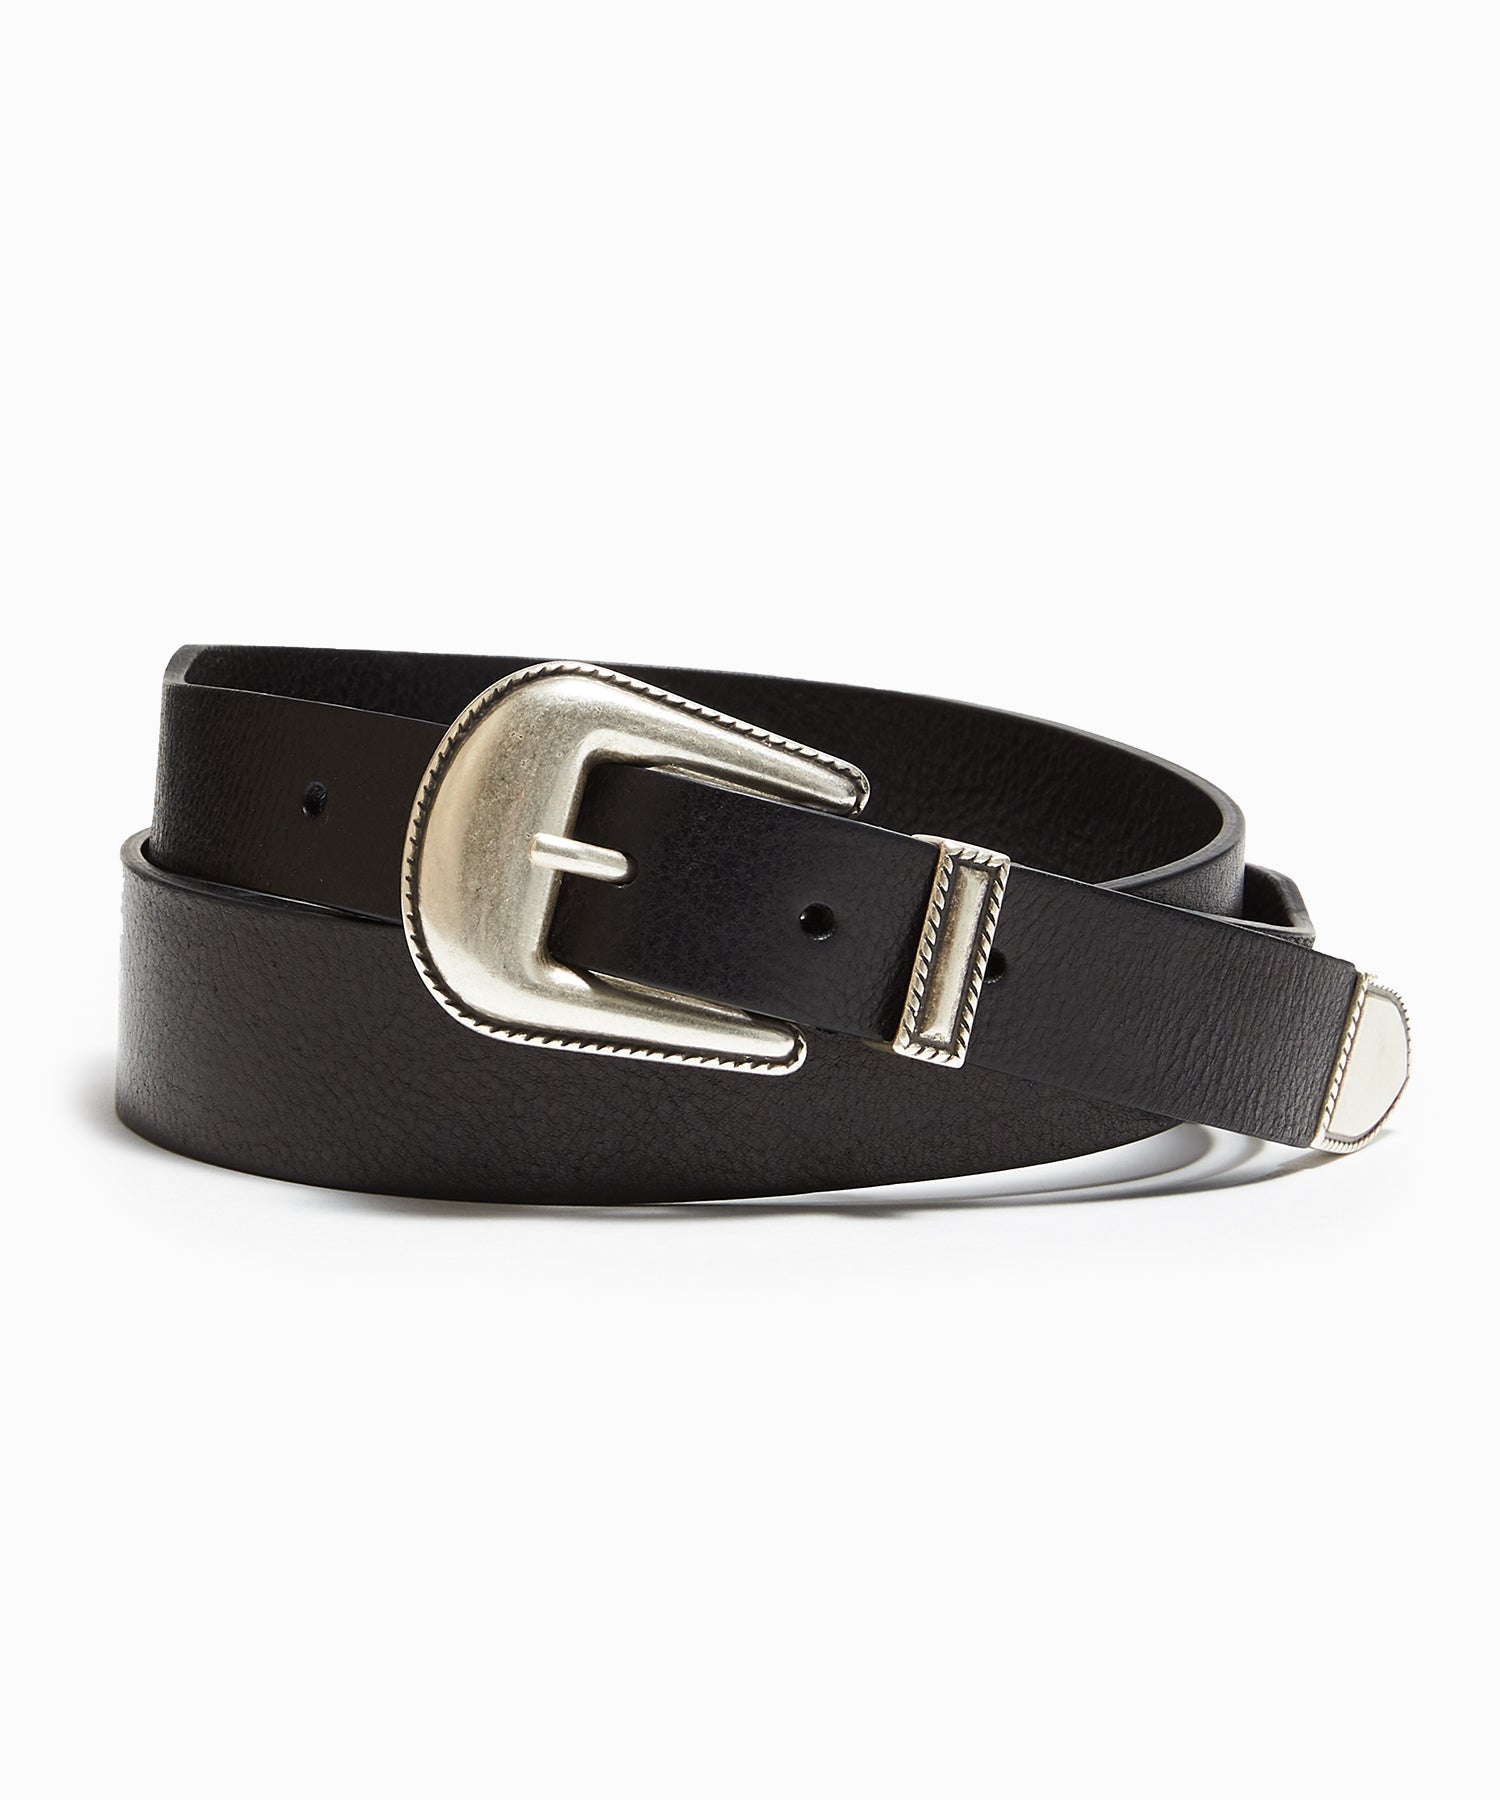 Anderson's Leather Western Belt in Black